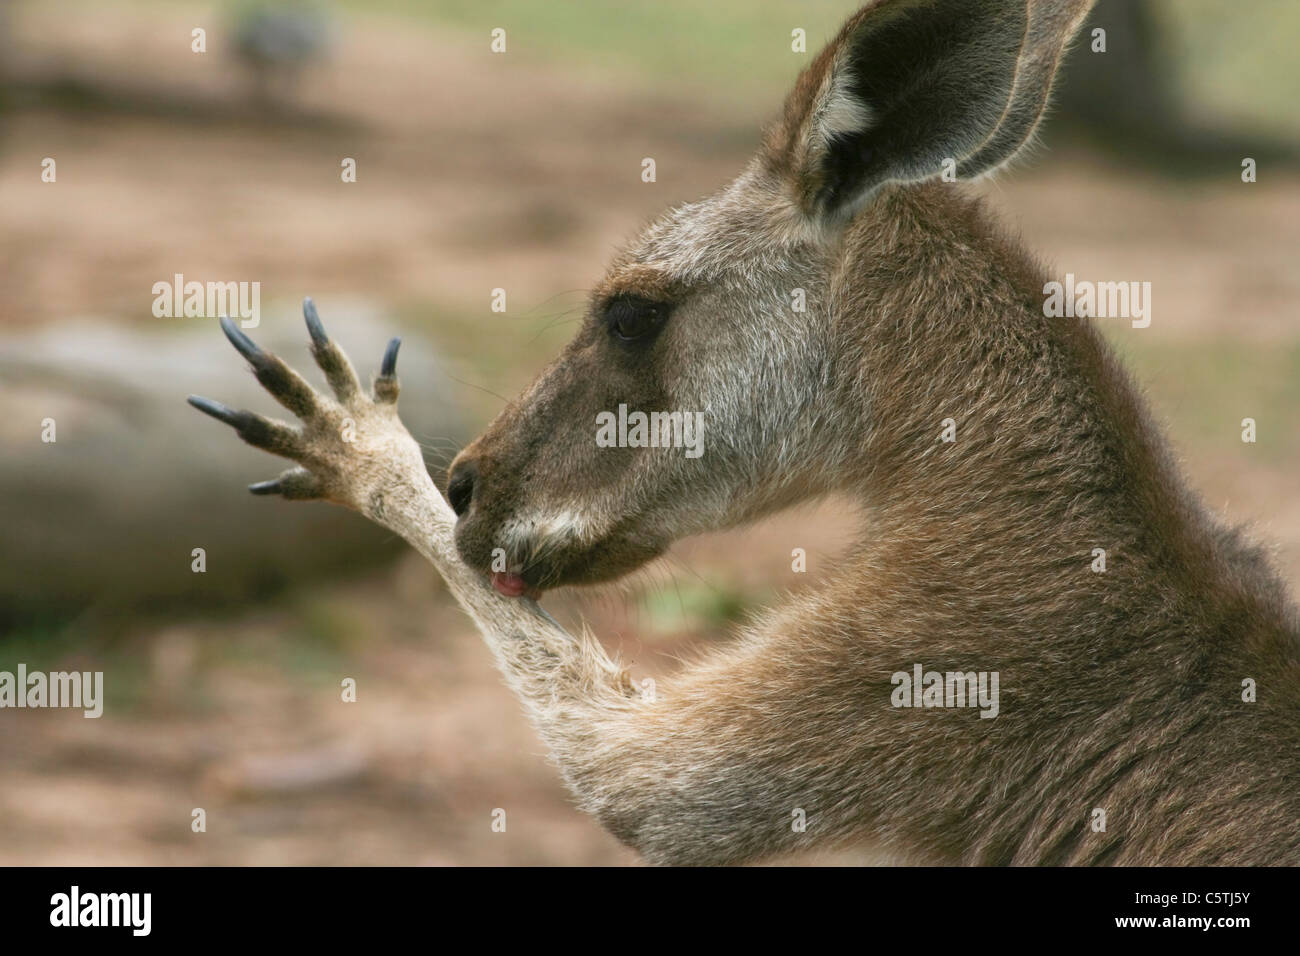 Australia, Queensland, Wallaby (Macropus agilis), side view, portrait Stock Photo